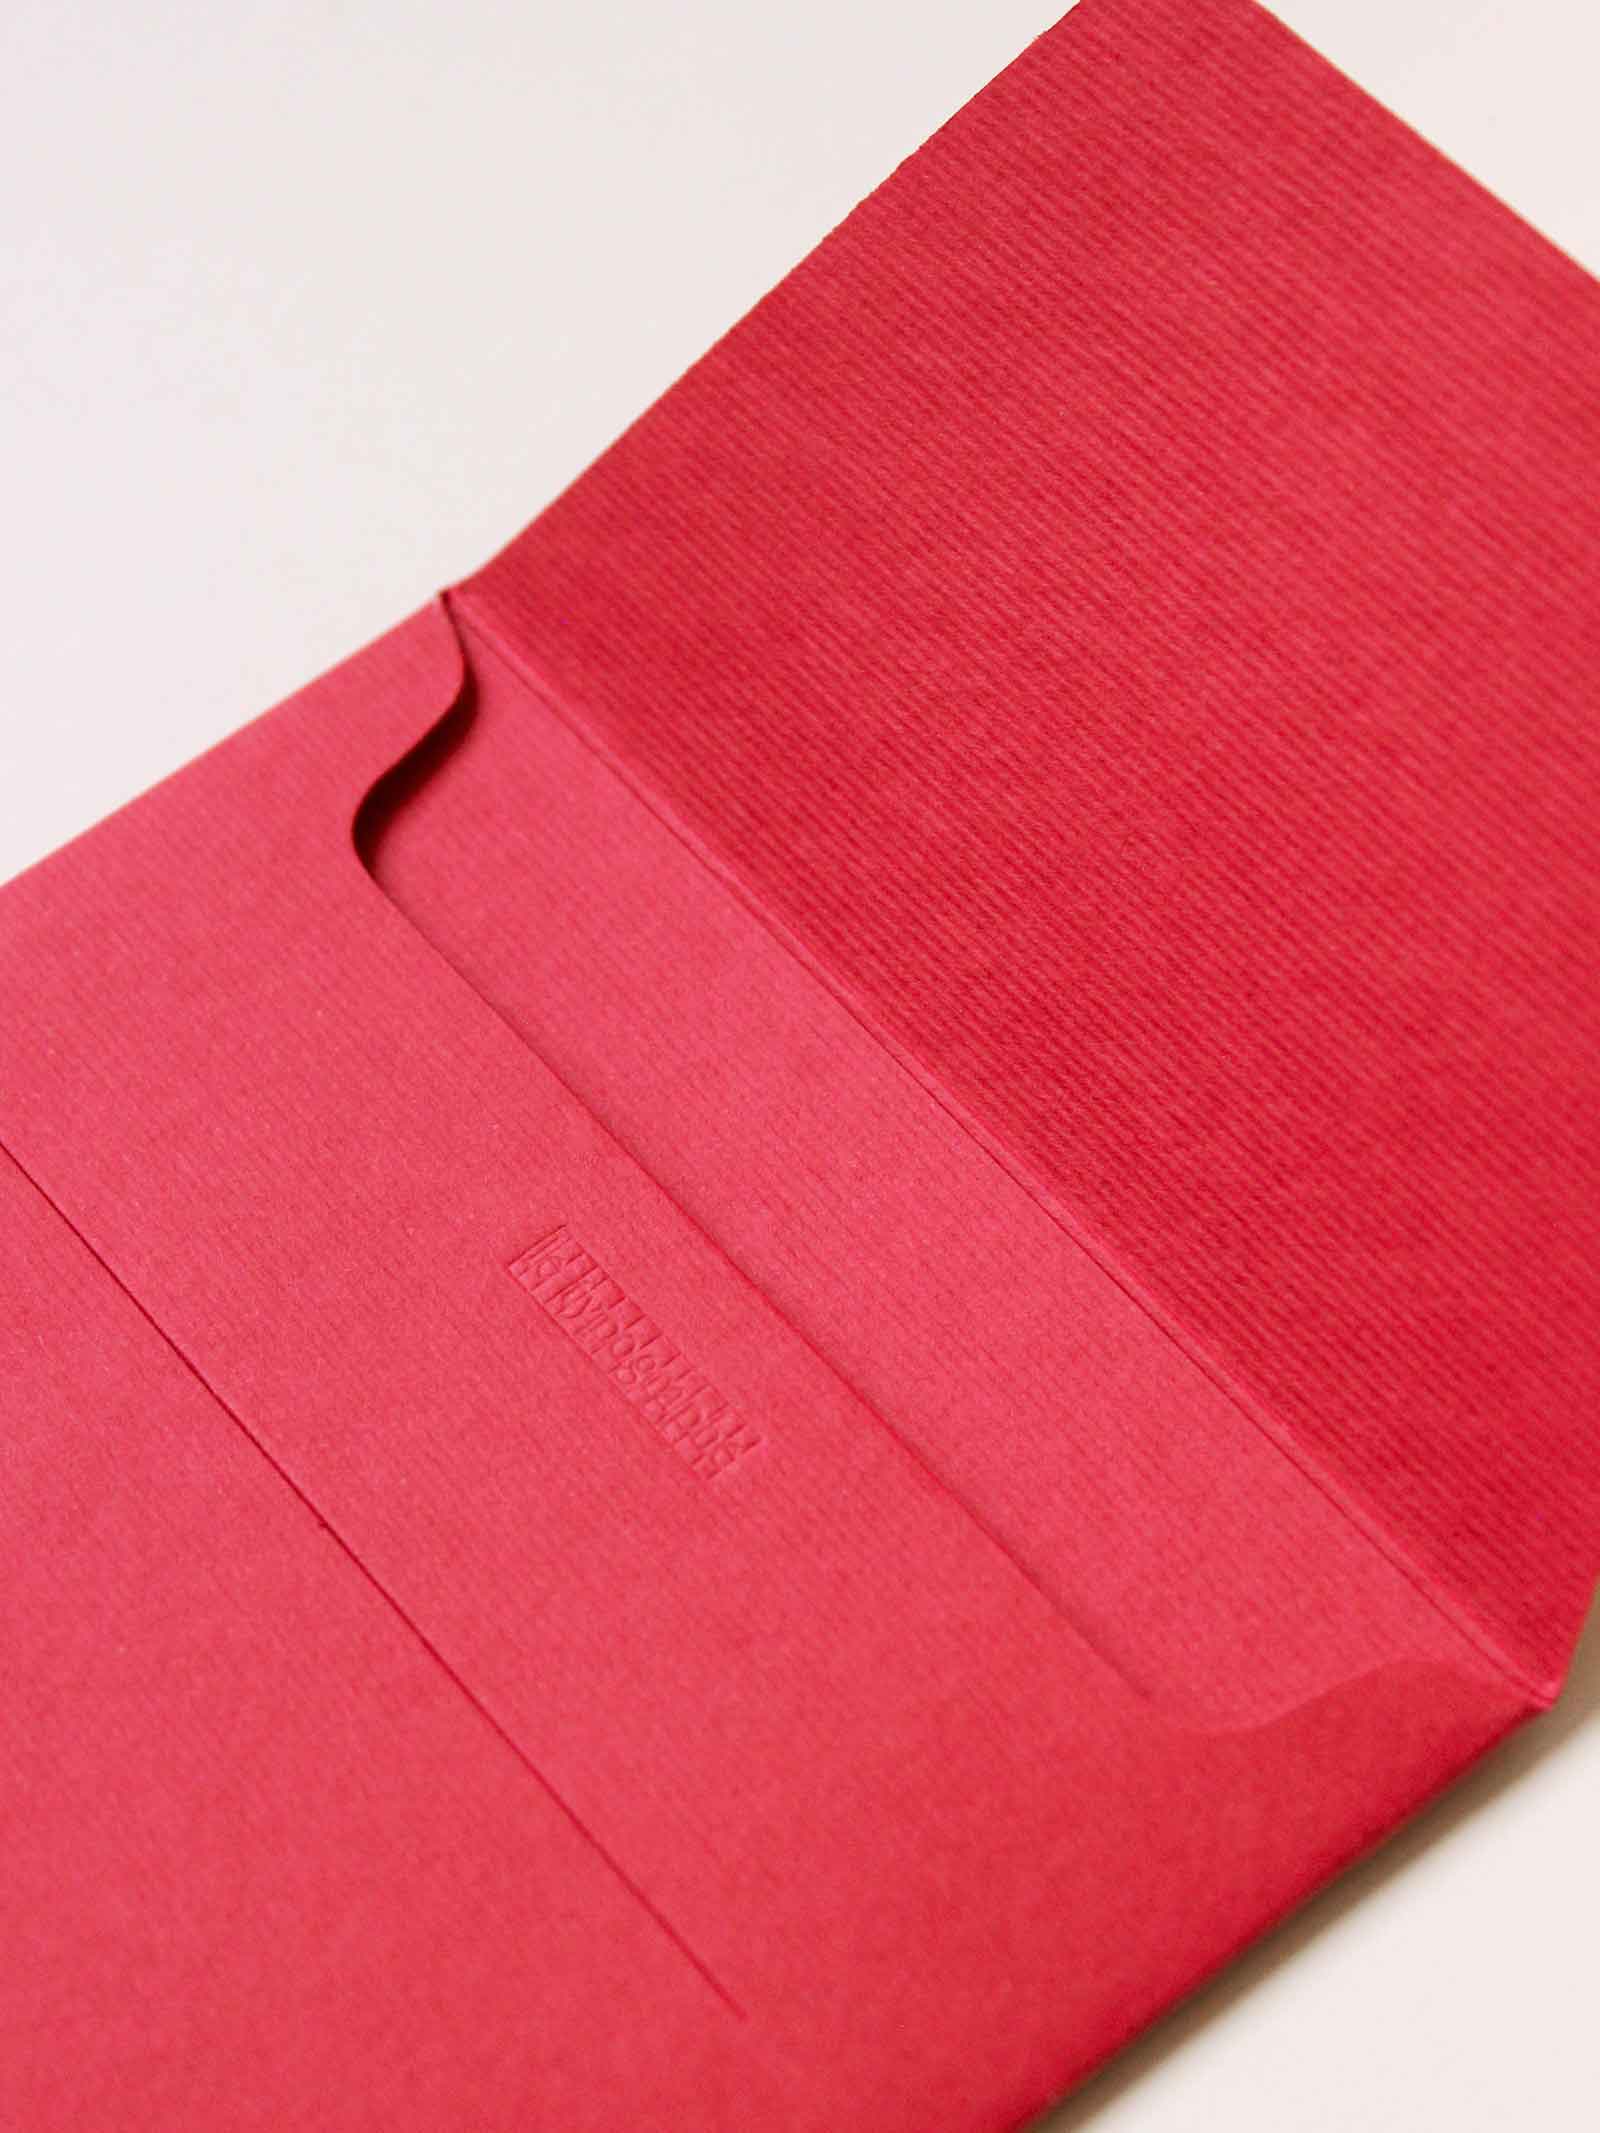 Enveloppes rouge coquelicot